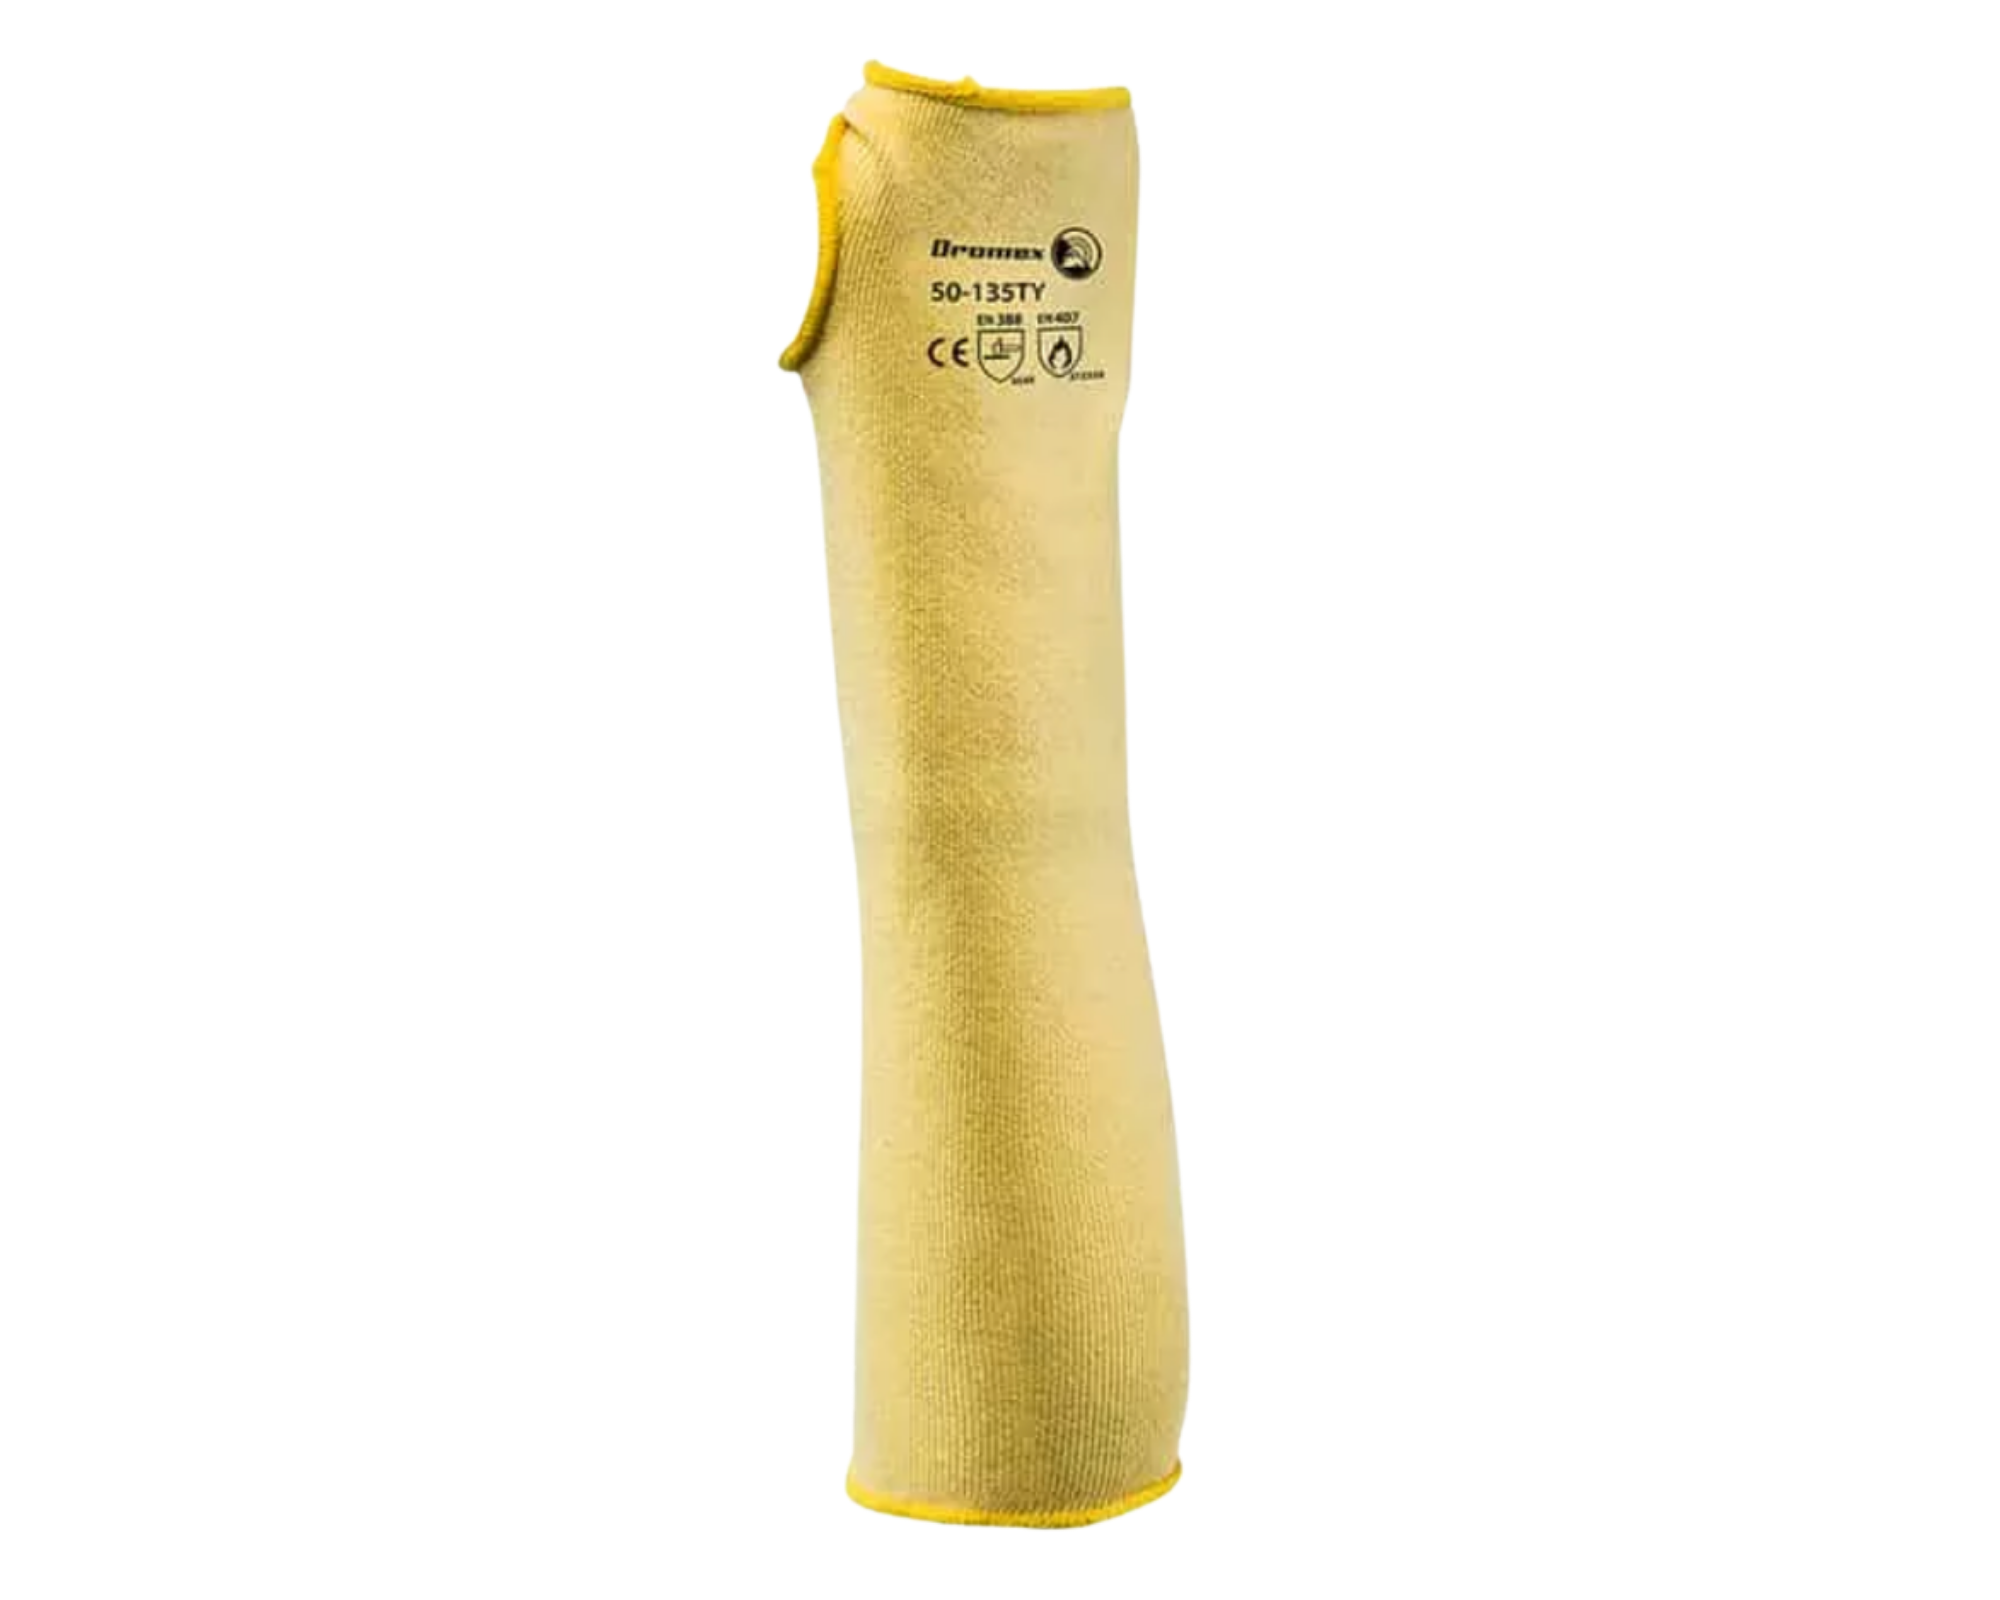 Dromex Taeki5 Heat & Cut Resistant Sleeve 35cm with Thumb Hole (50-135TY) - Yellow